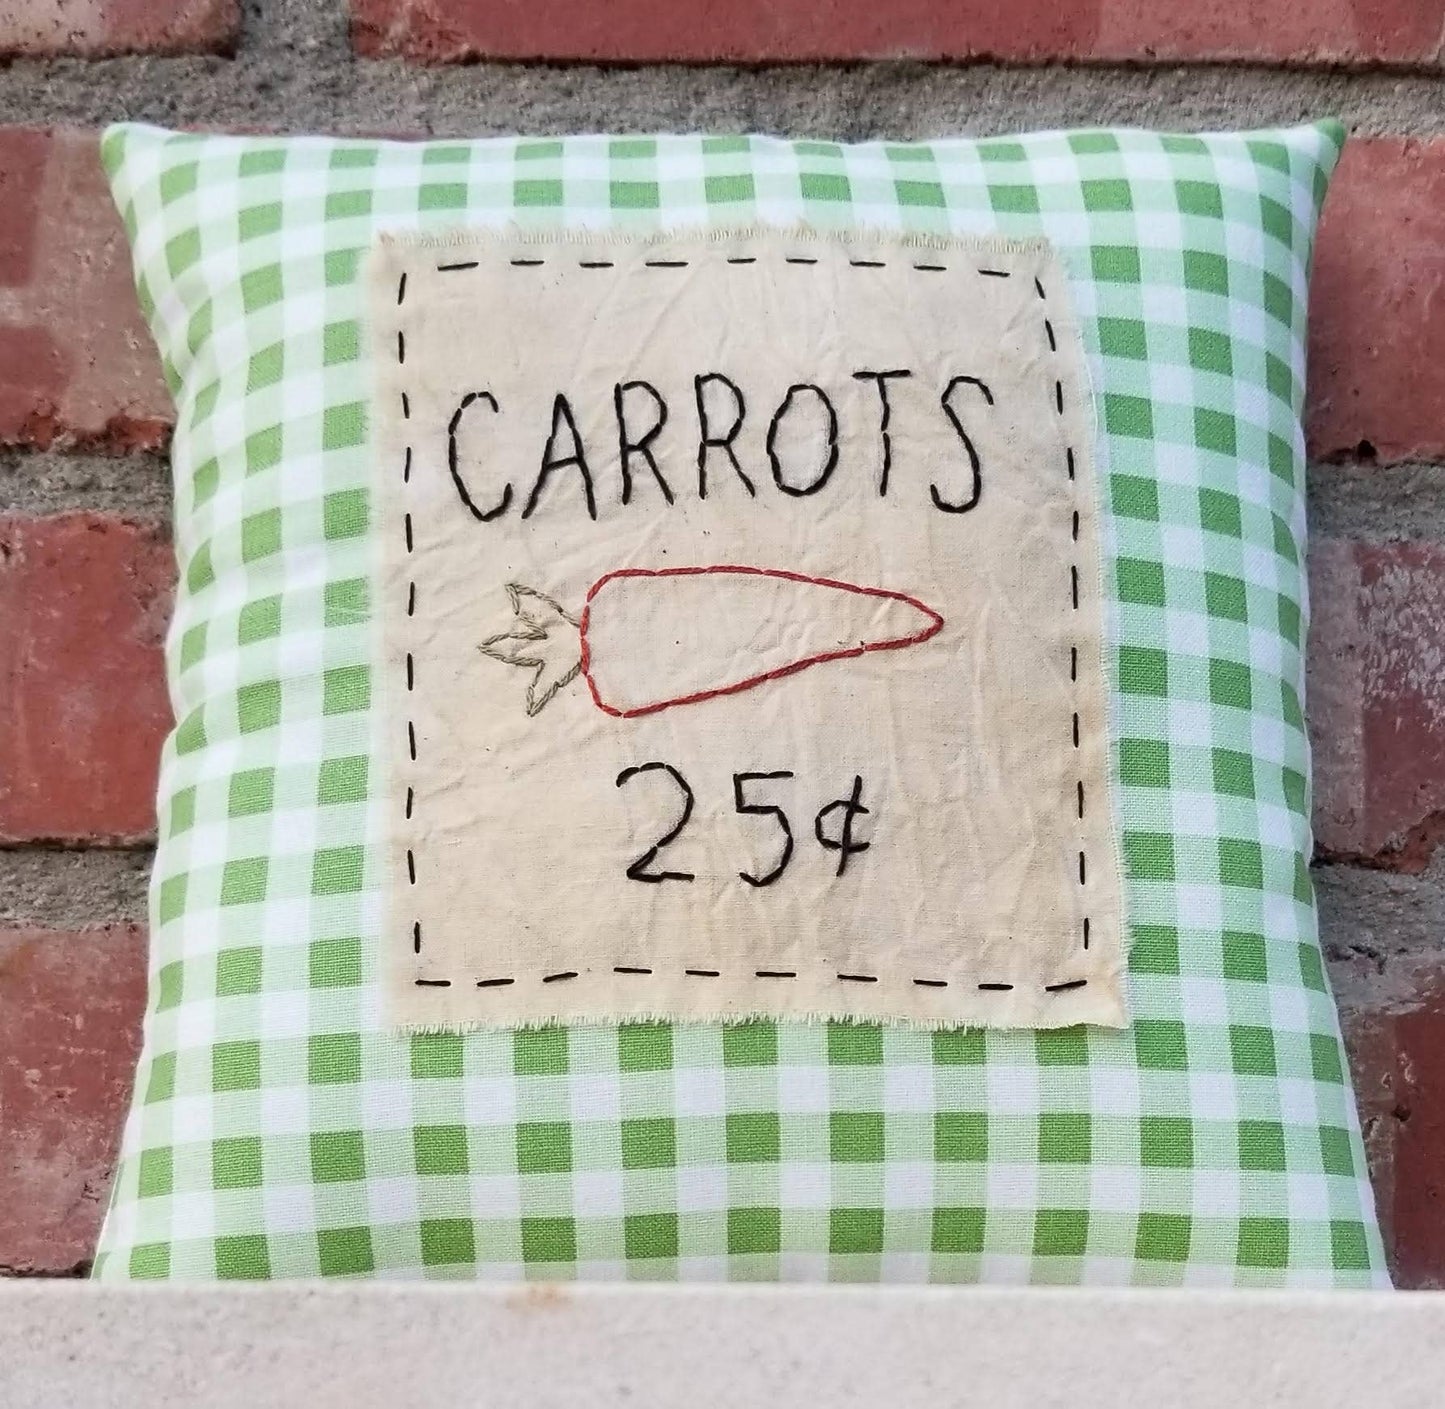 Carrots 25 Cents